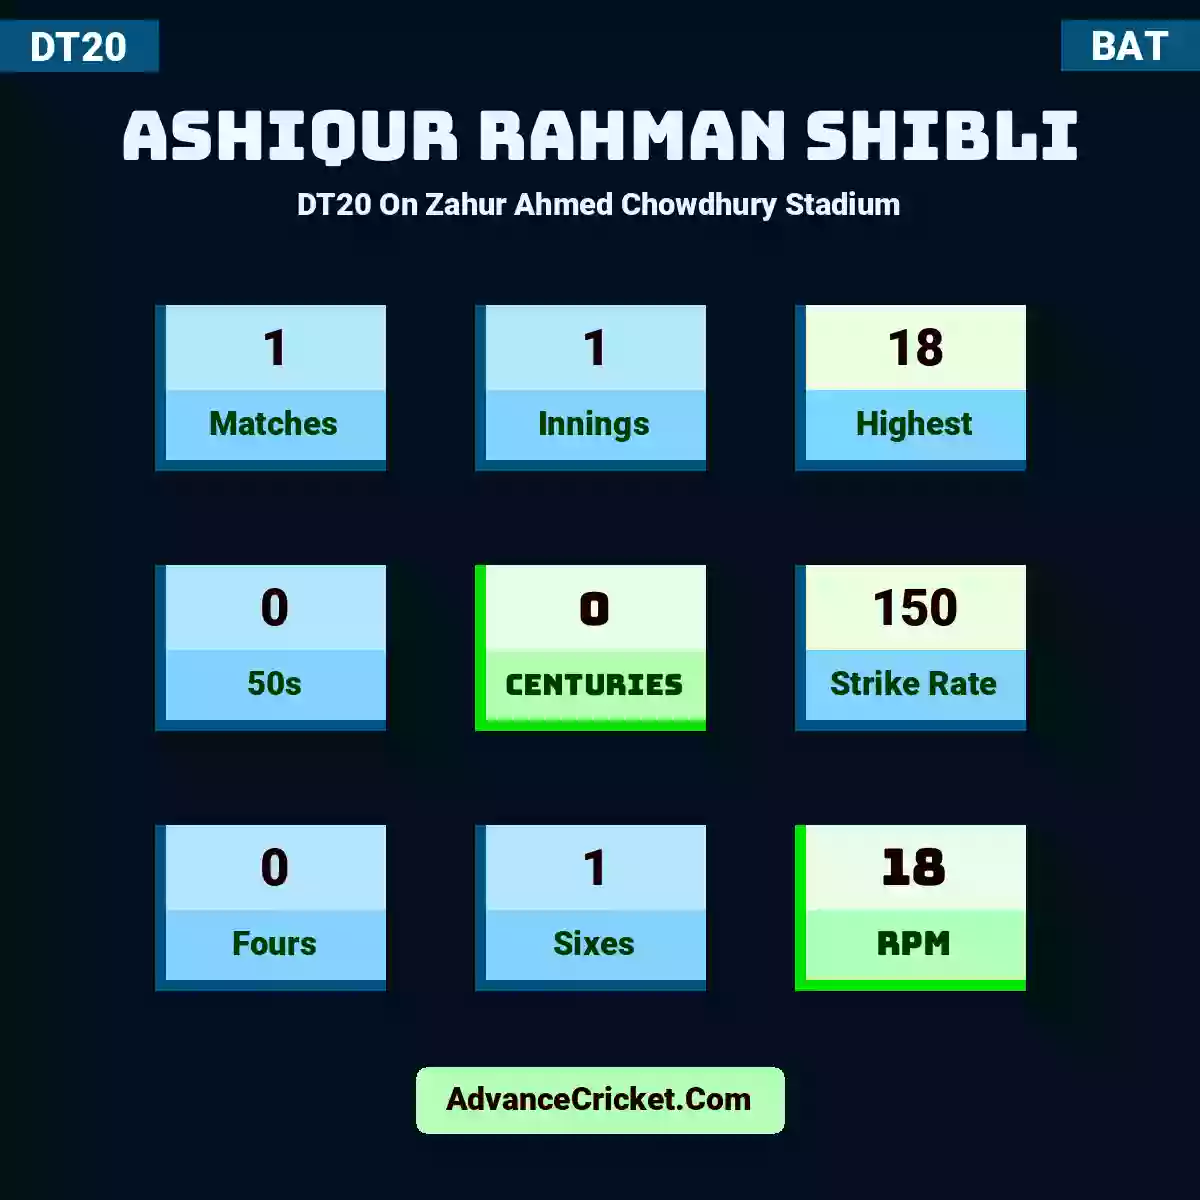 Ashiqur Rahman Shibli DT20  On Zahur Ahmed Chowdhury Stadium, Ashiqur Rahman Shibli played 1 matches, scored 18 runs as highest, 0 half-centuries, and 0 centuries, with a strike rate of 150. A.Rahman.Shibli hit 0 fours and 1 sixes, with an RPM of 18.